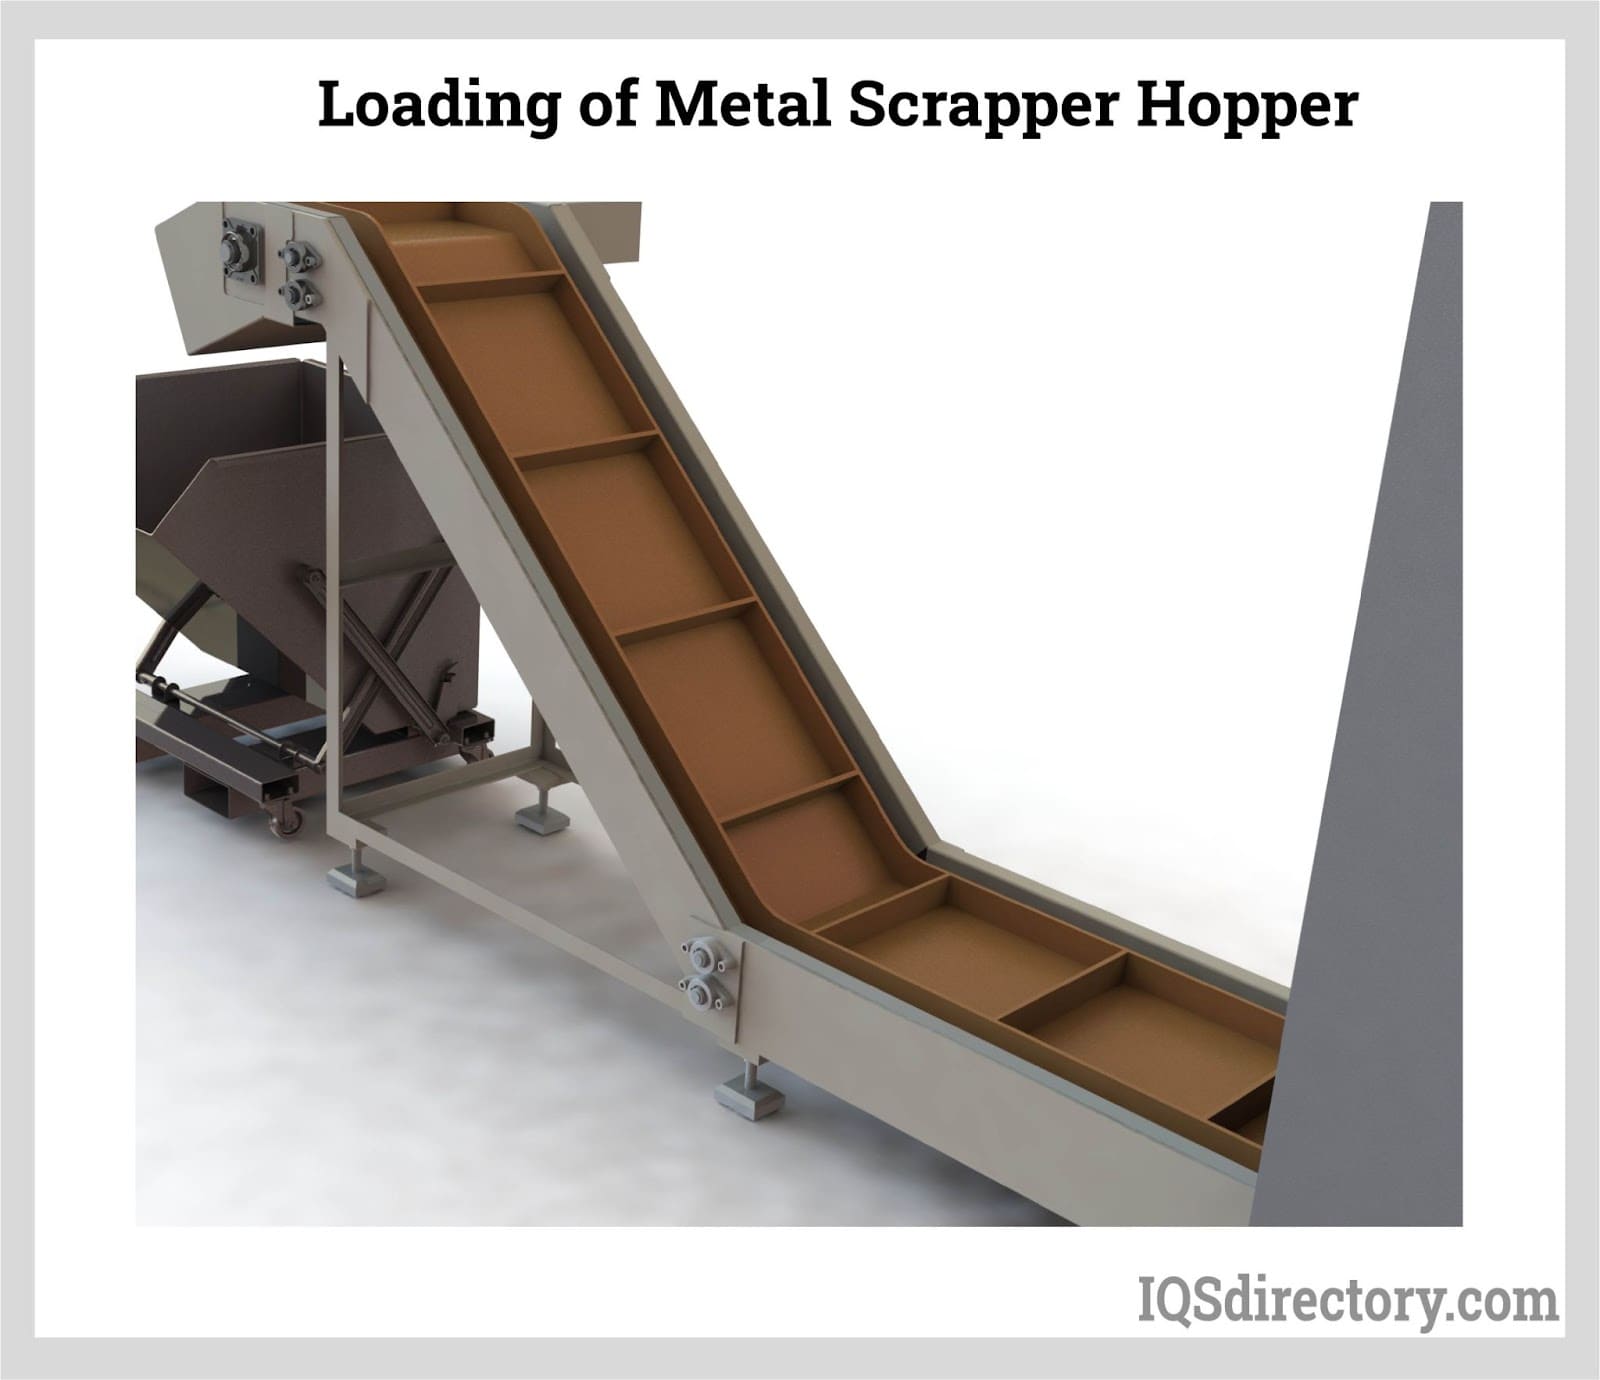 Loading of Metal Scrapper Hopper